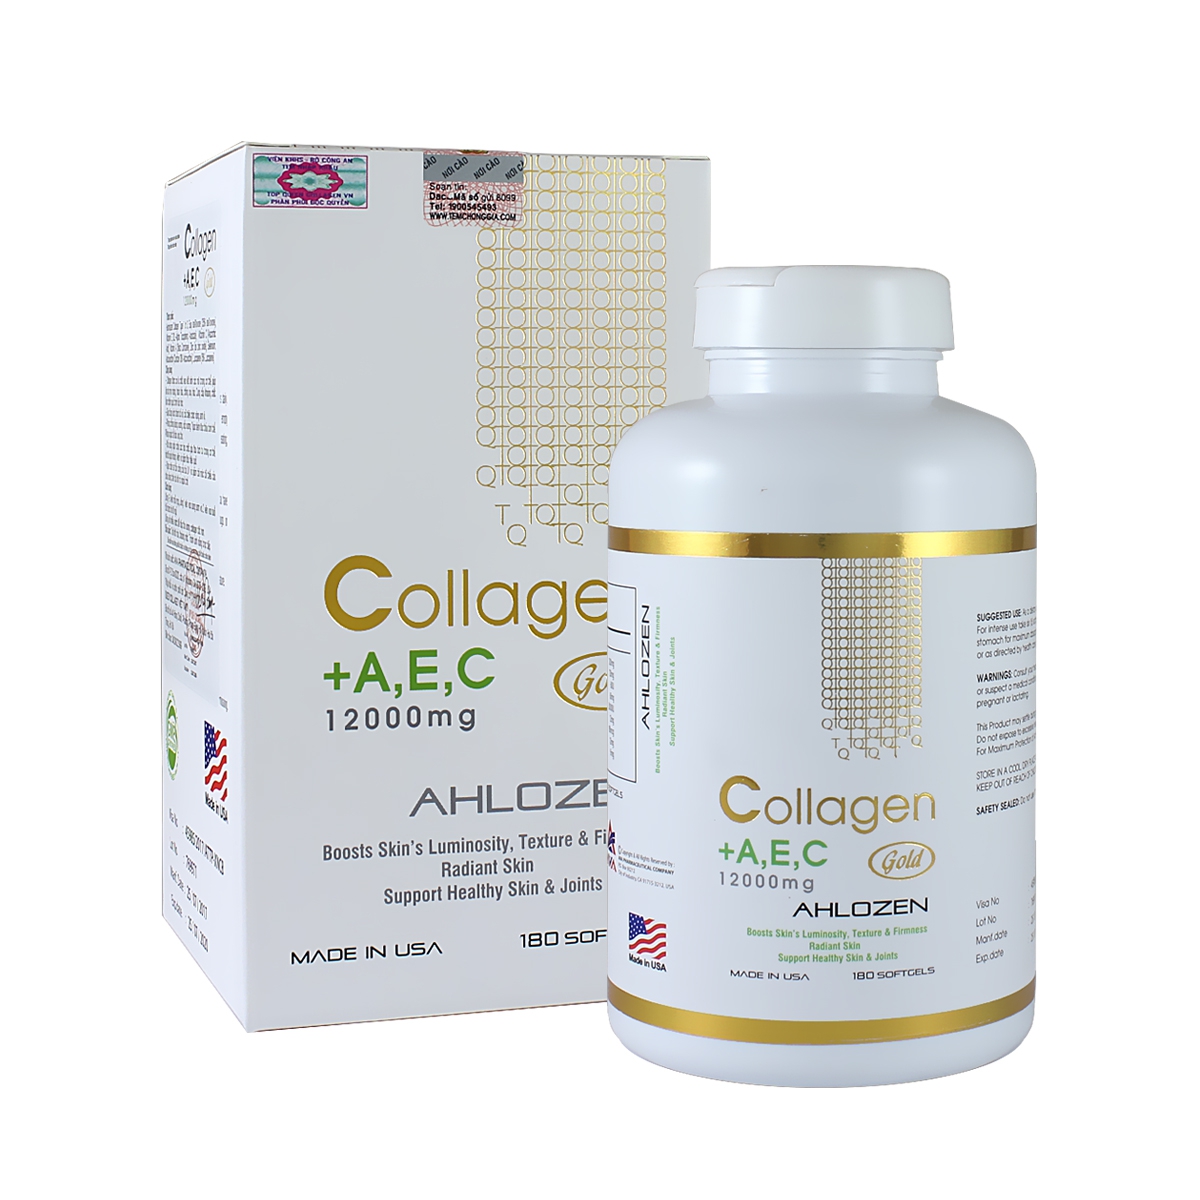 Ahlozen Collagen +A,E,C Gold 12000mg đẹp da, chống lão hóa, Chai 180 viên